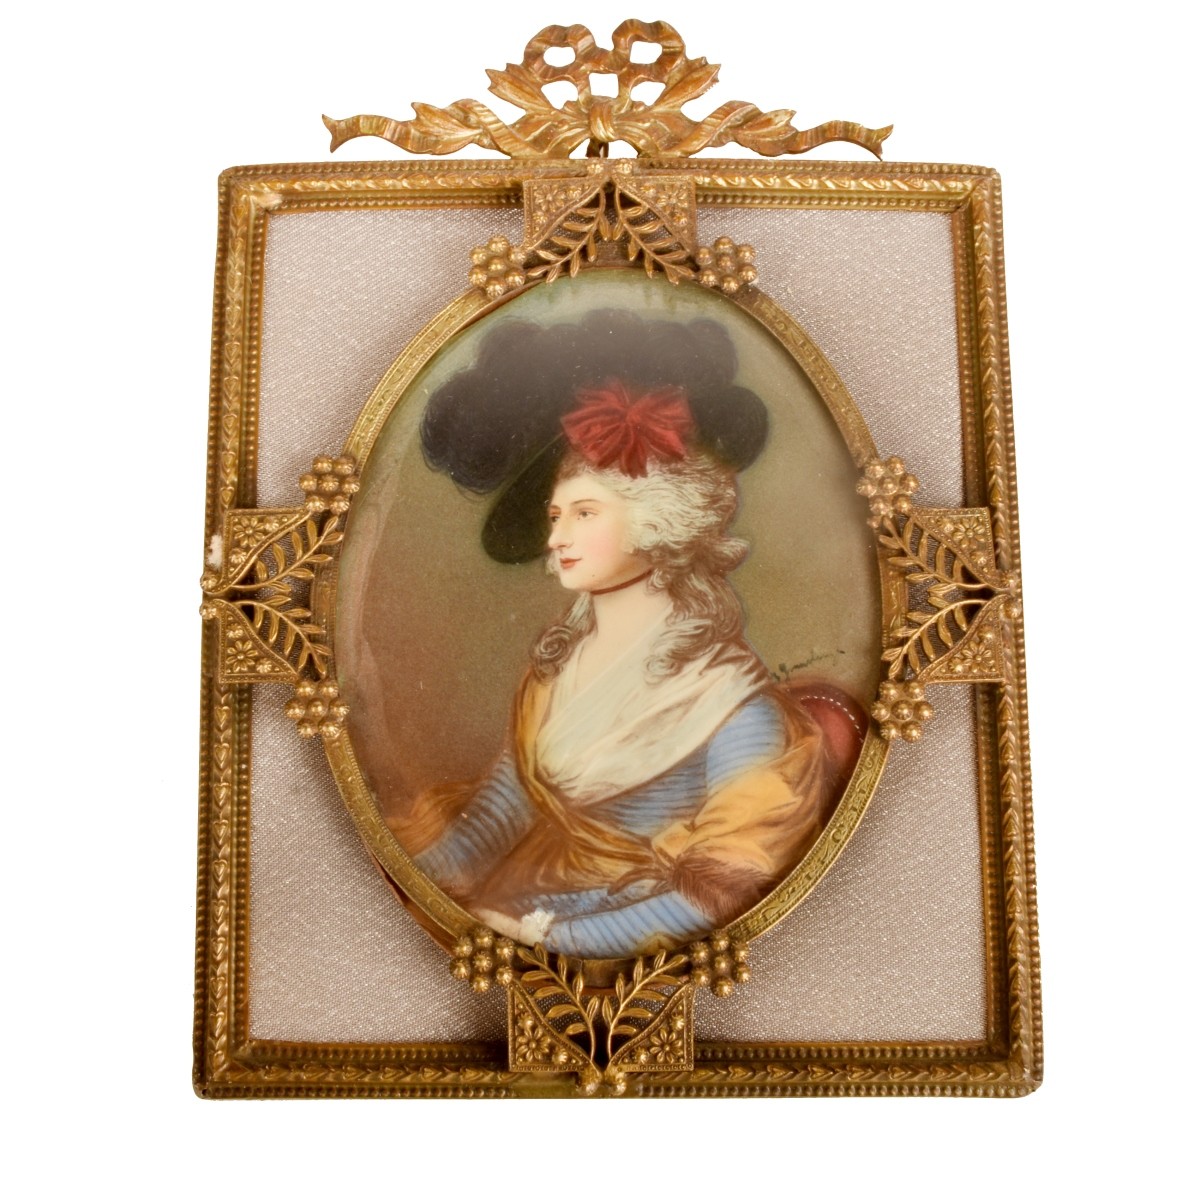 19th C. Miniature Portrait Sarah Siddons